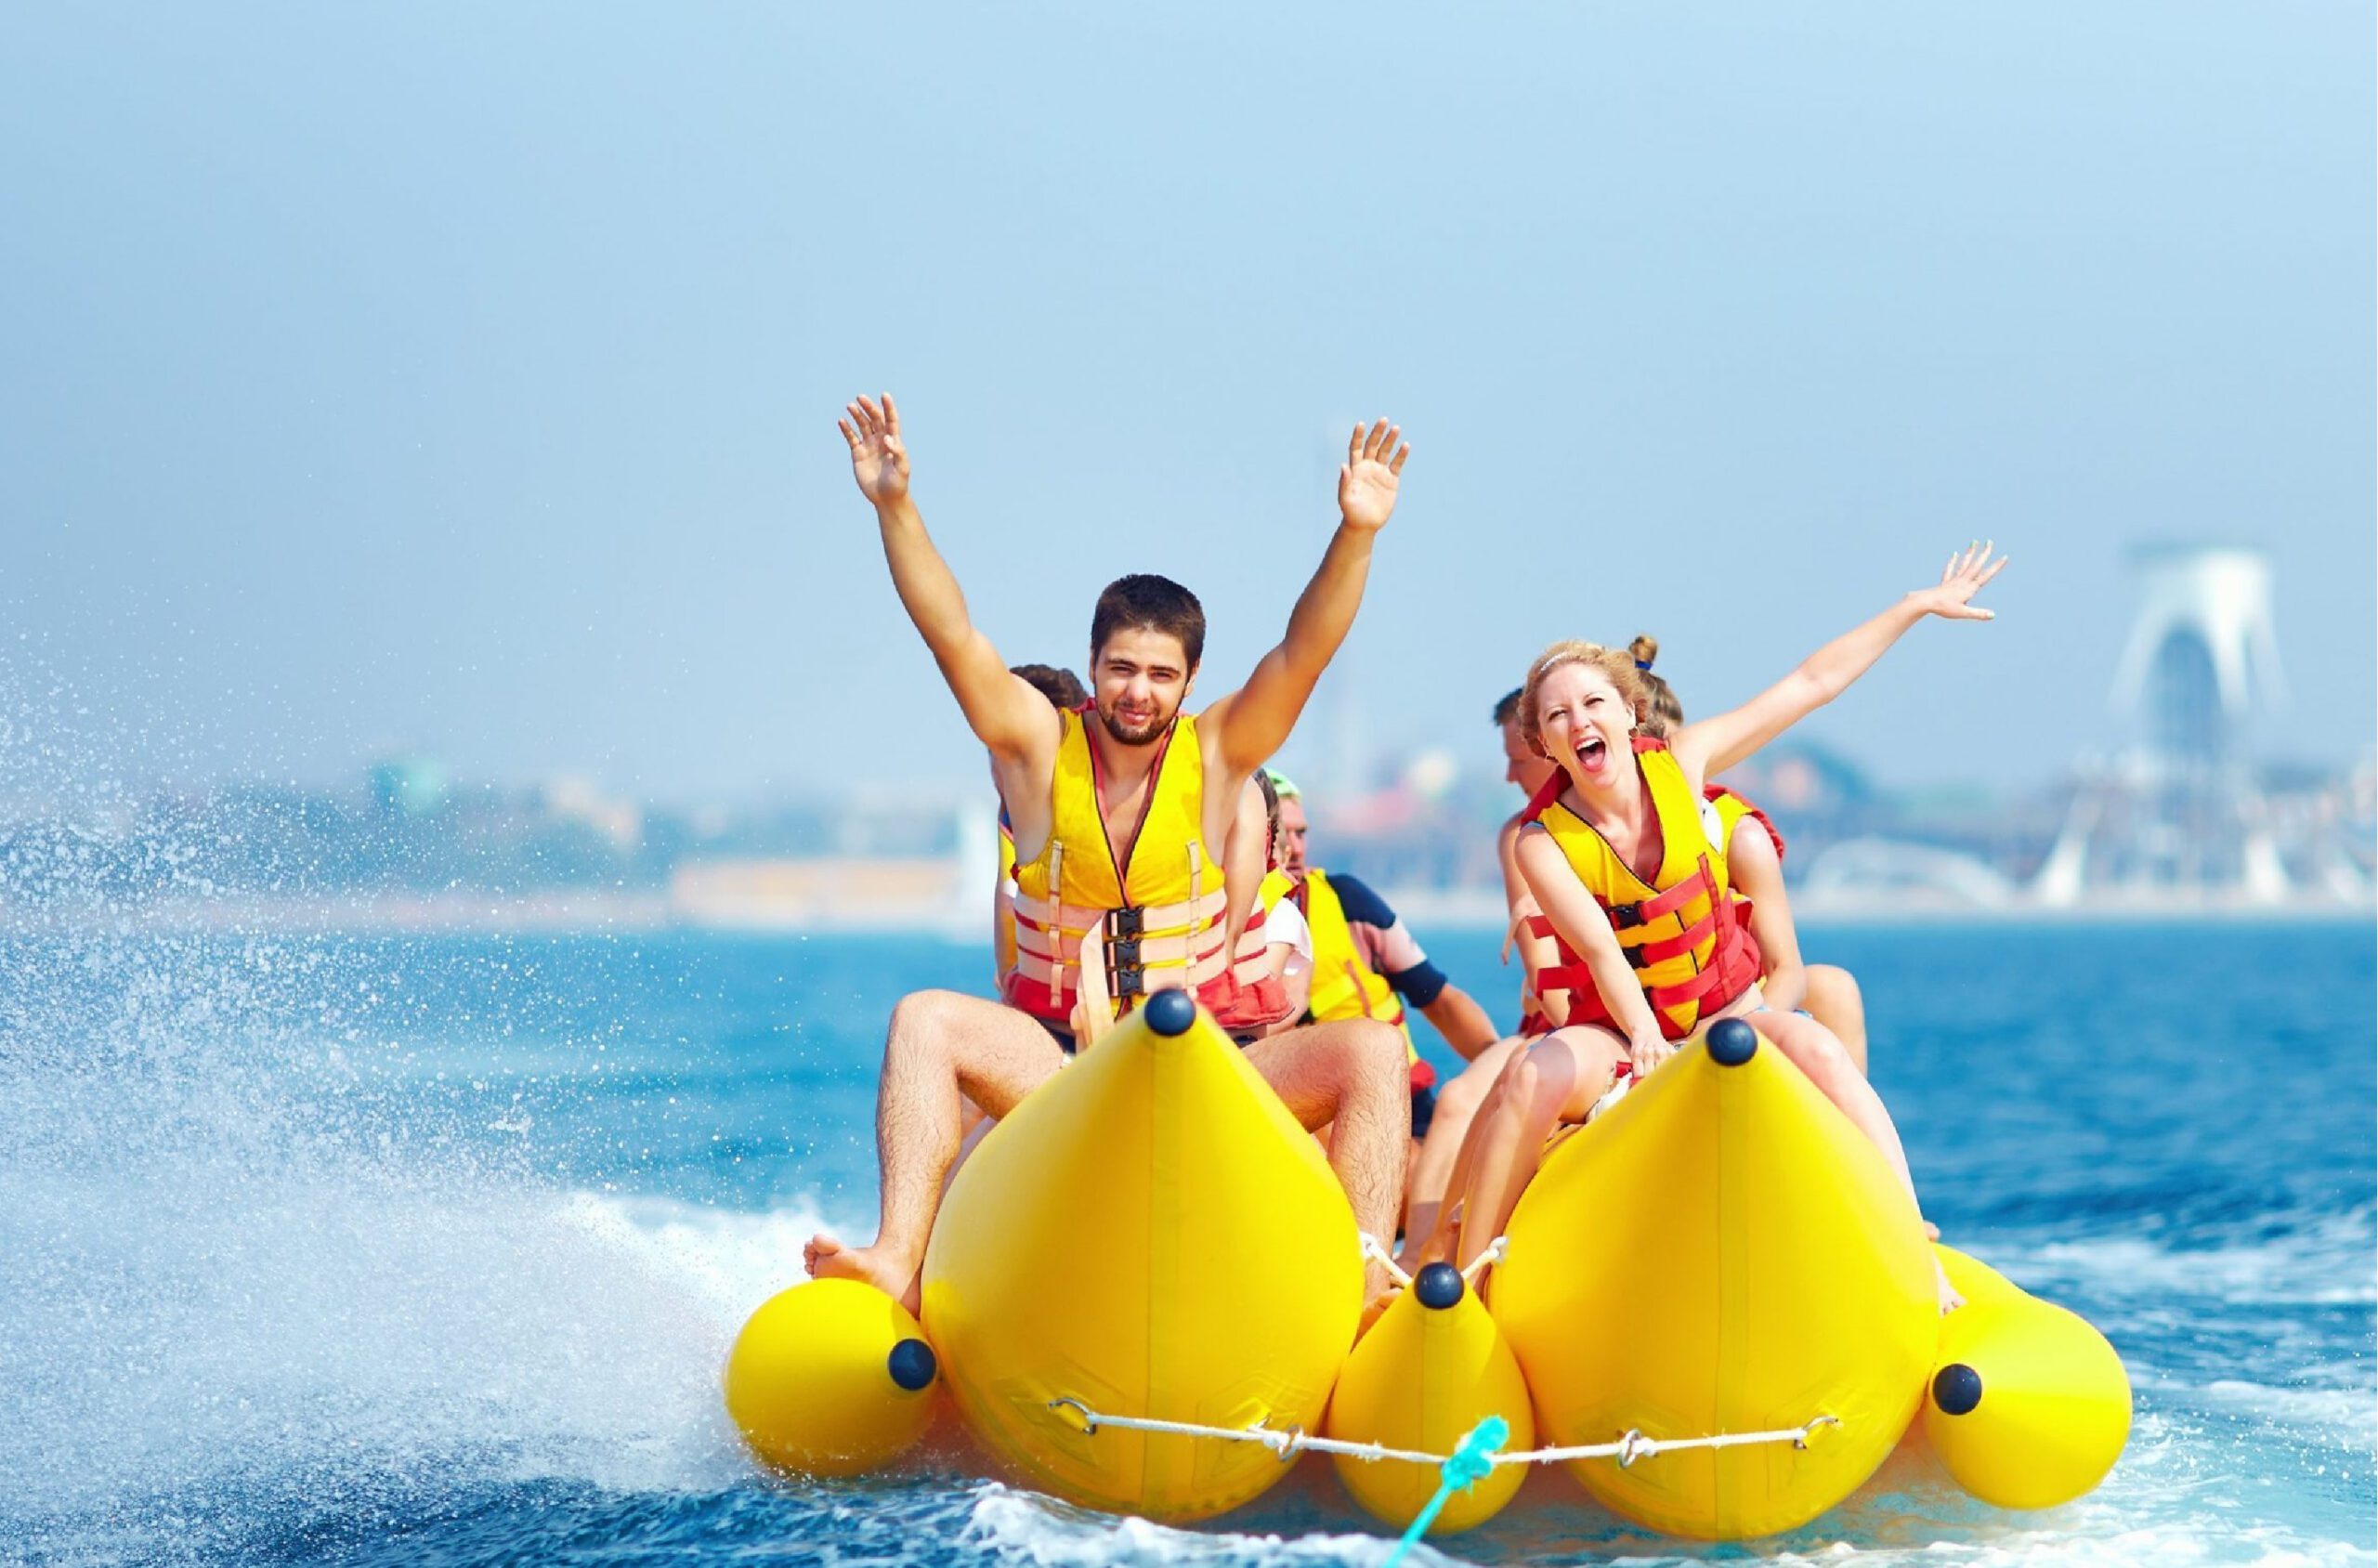 Splash of Fun and Adventure with Dubai Yachts' Banana Boat Ride